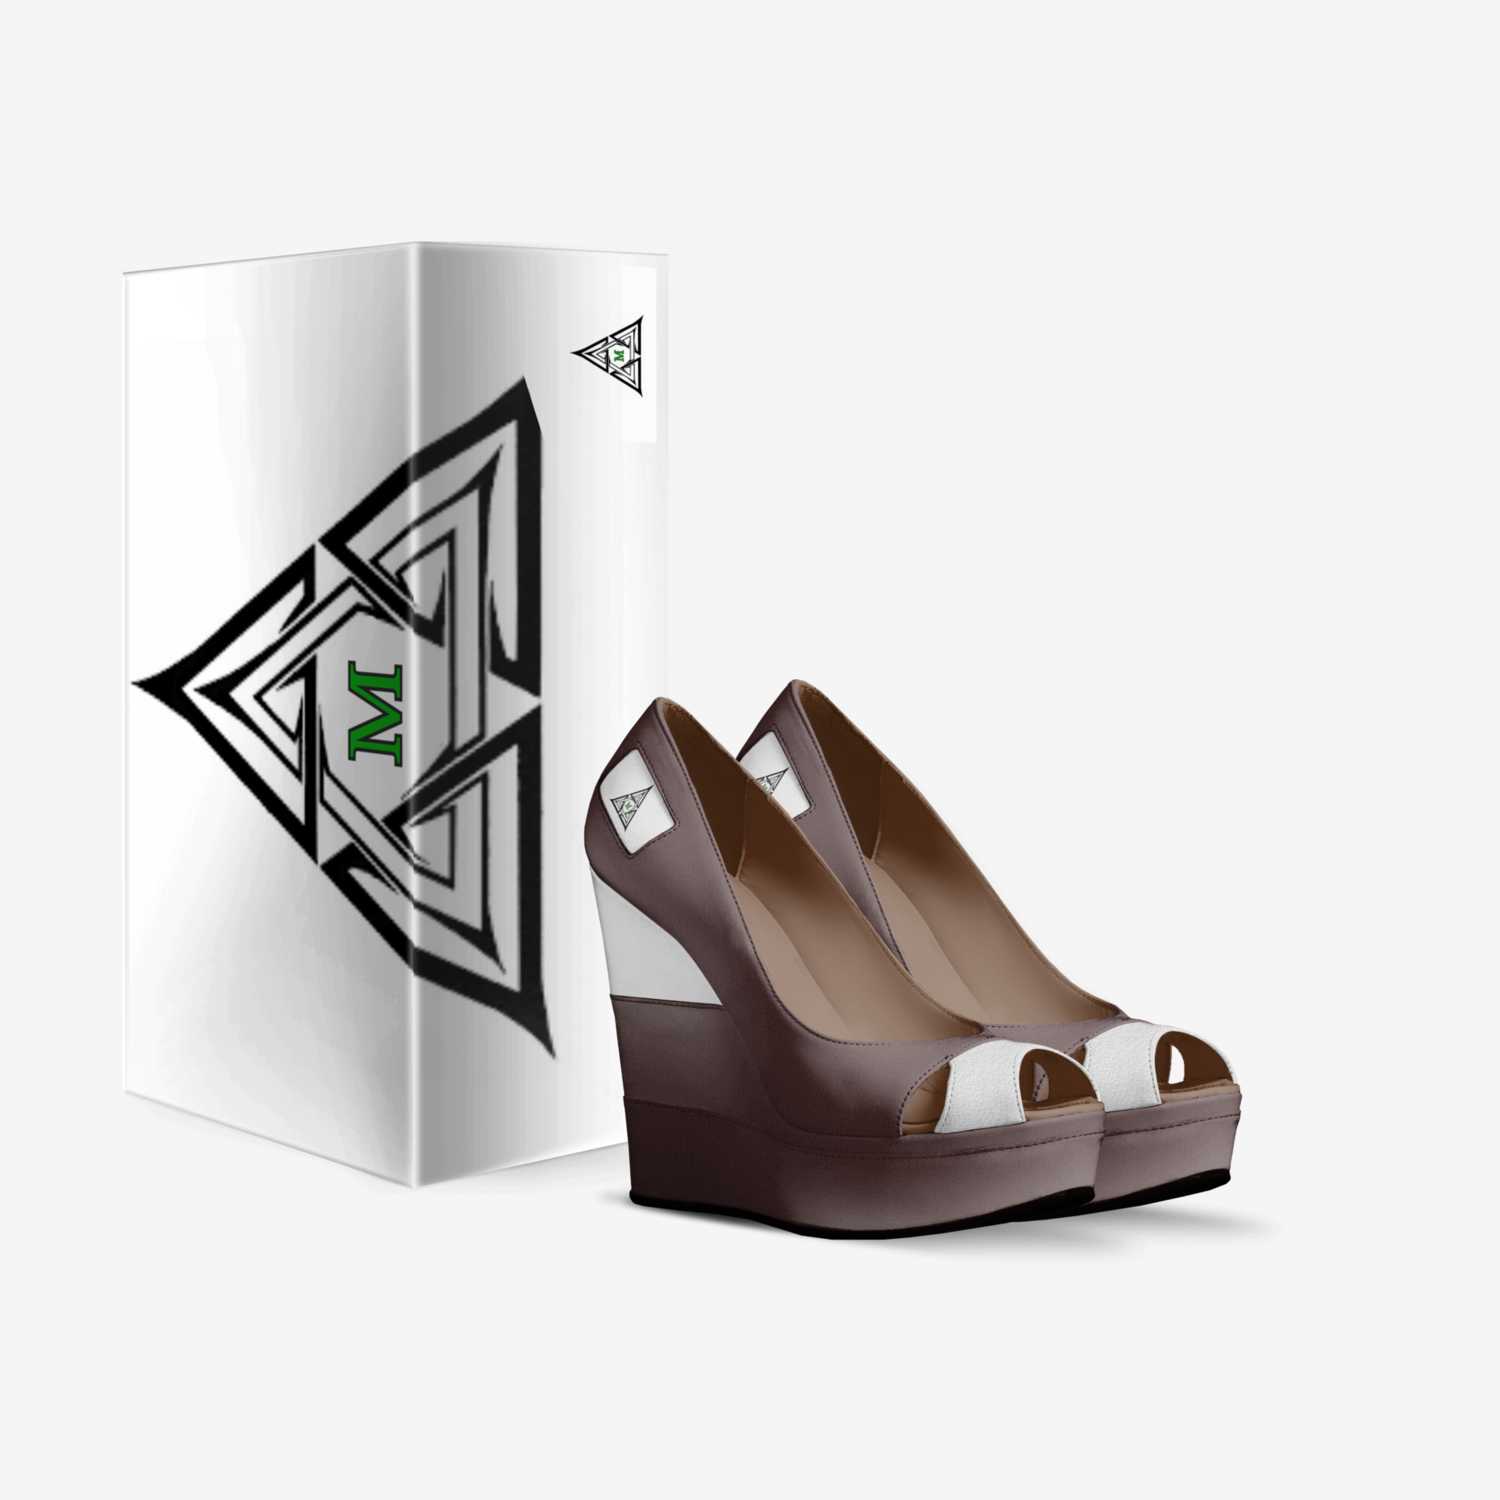 Murphnetti WS custom made in Italy shoes by Tyriek Murphy | Box view